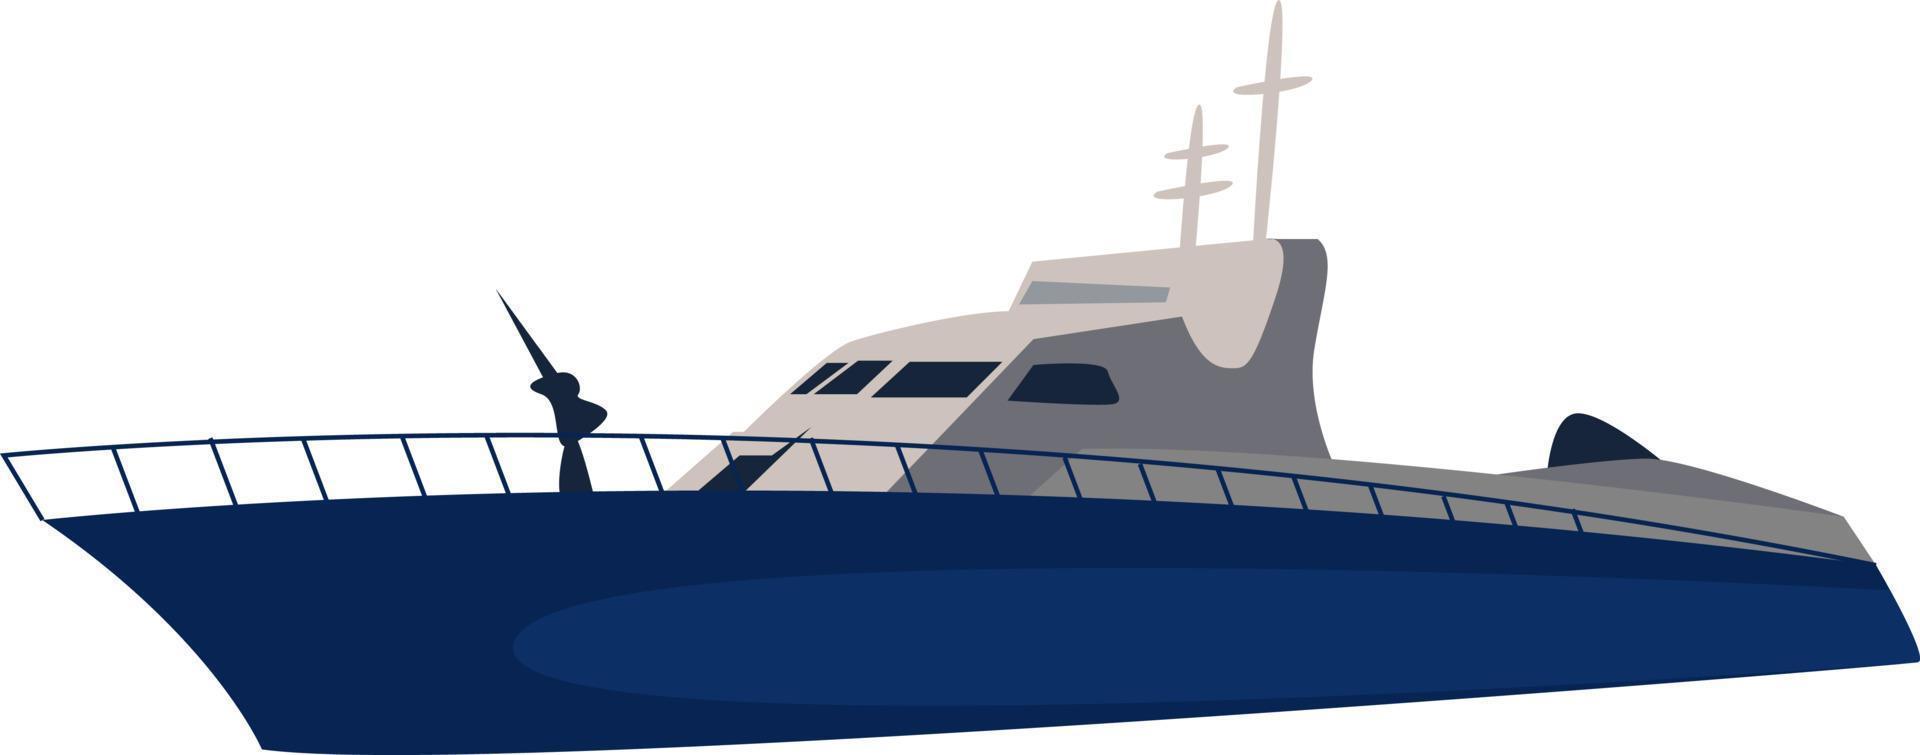 Coast security boat, illustration, vector on white background